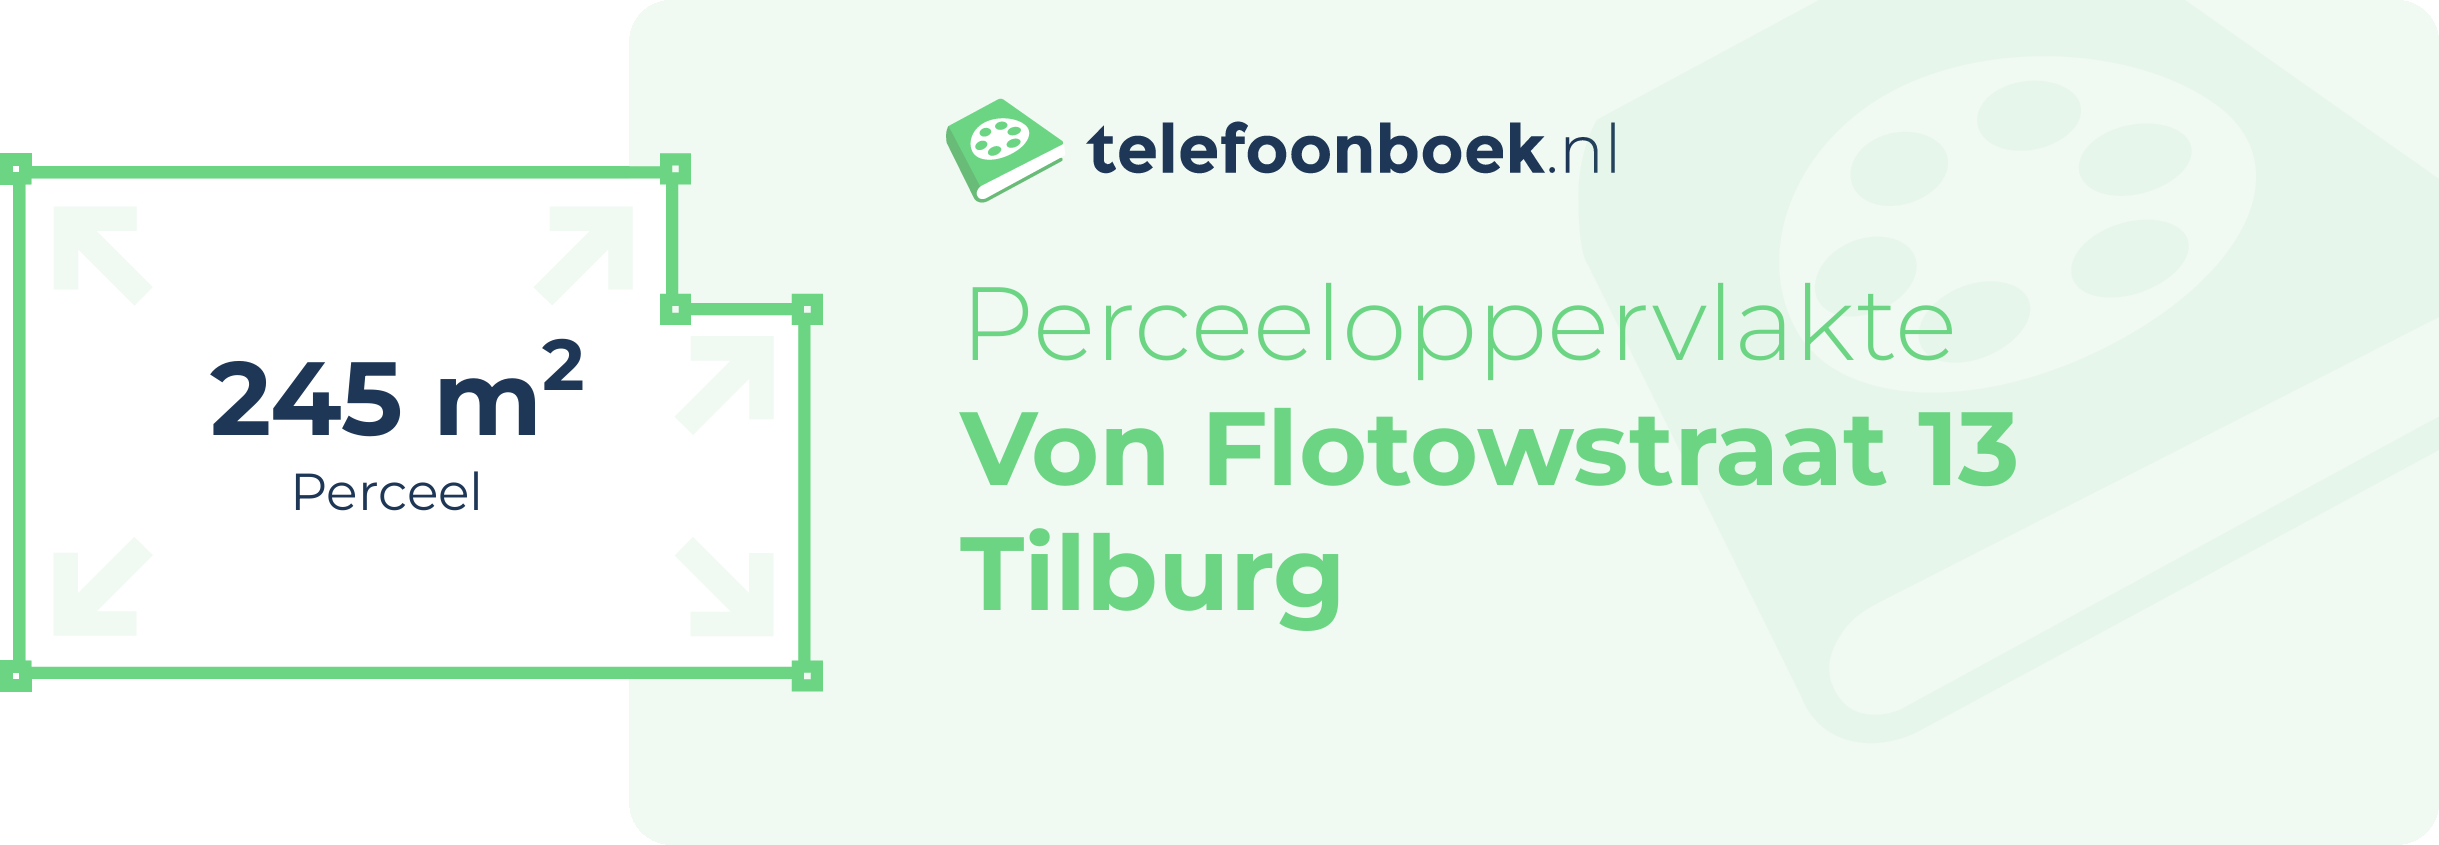 Perceeloppervlakte Von Flotowstraat 13 Tilburg